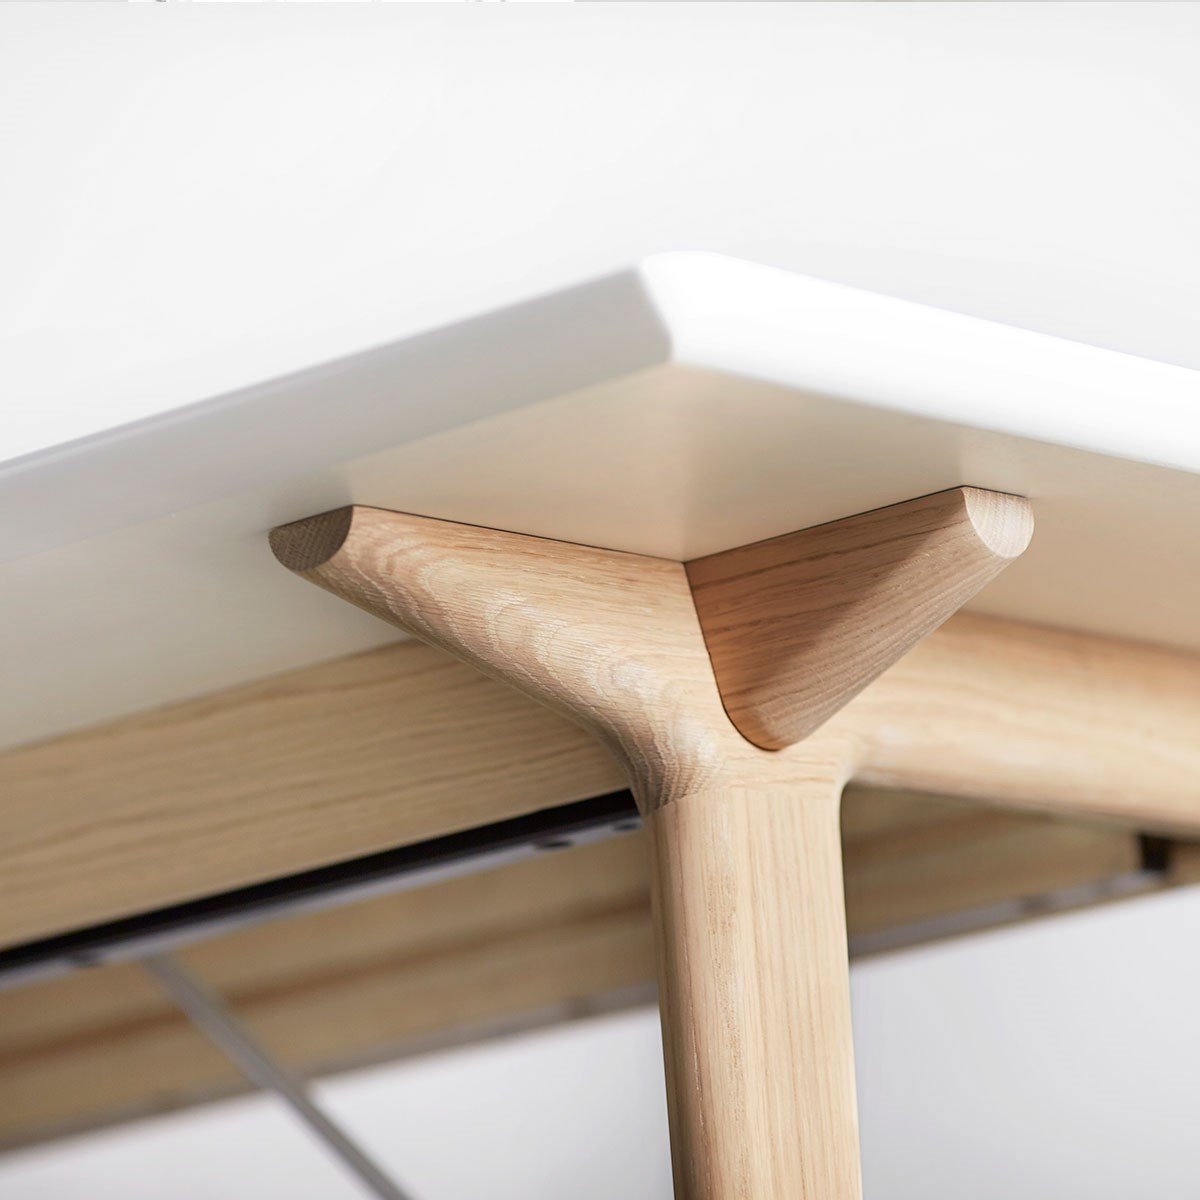 Andersen Furniture T7 utdragbart bordvitt laminat, tvålad ek, 220 cm